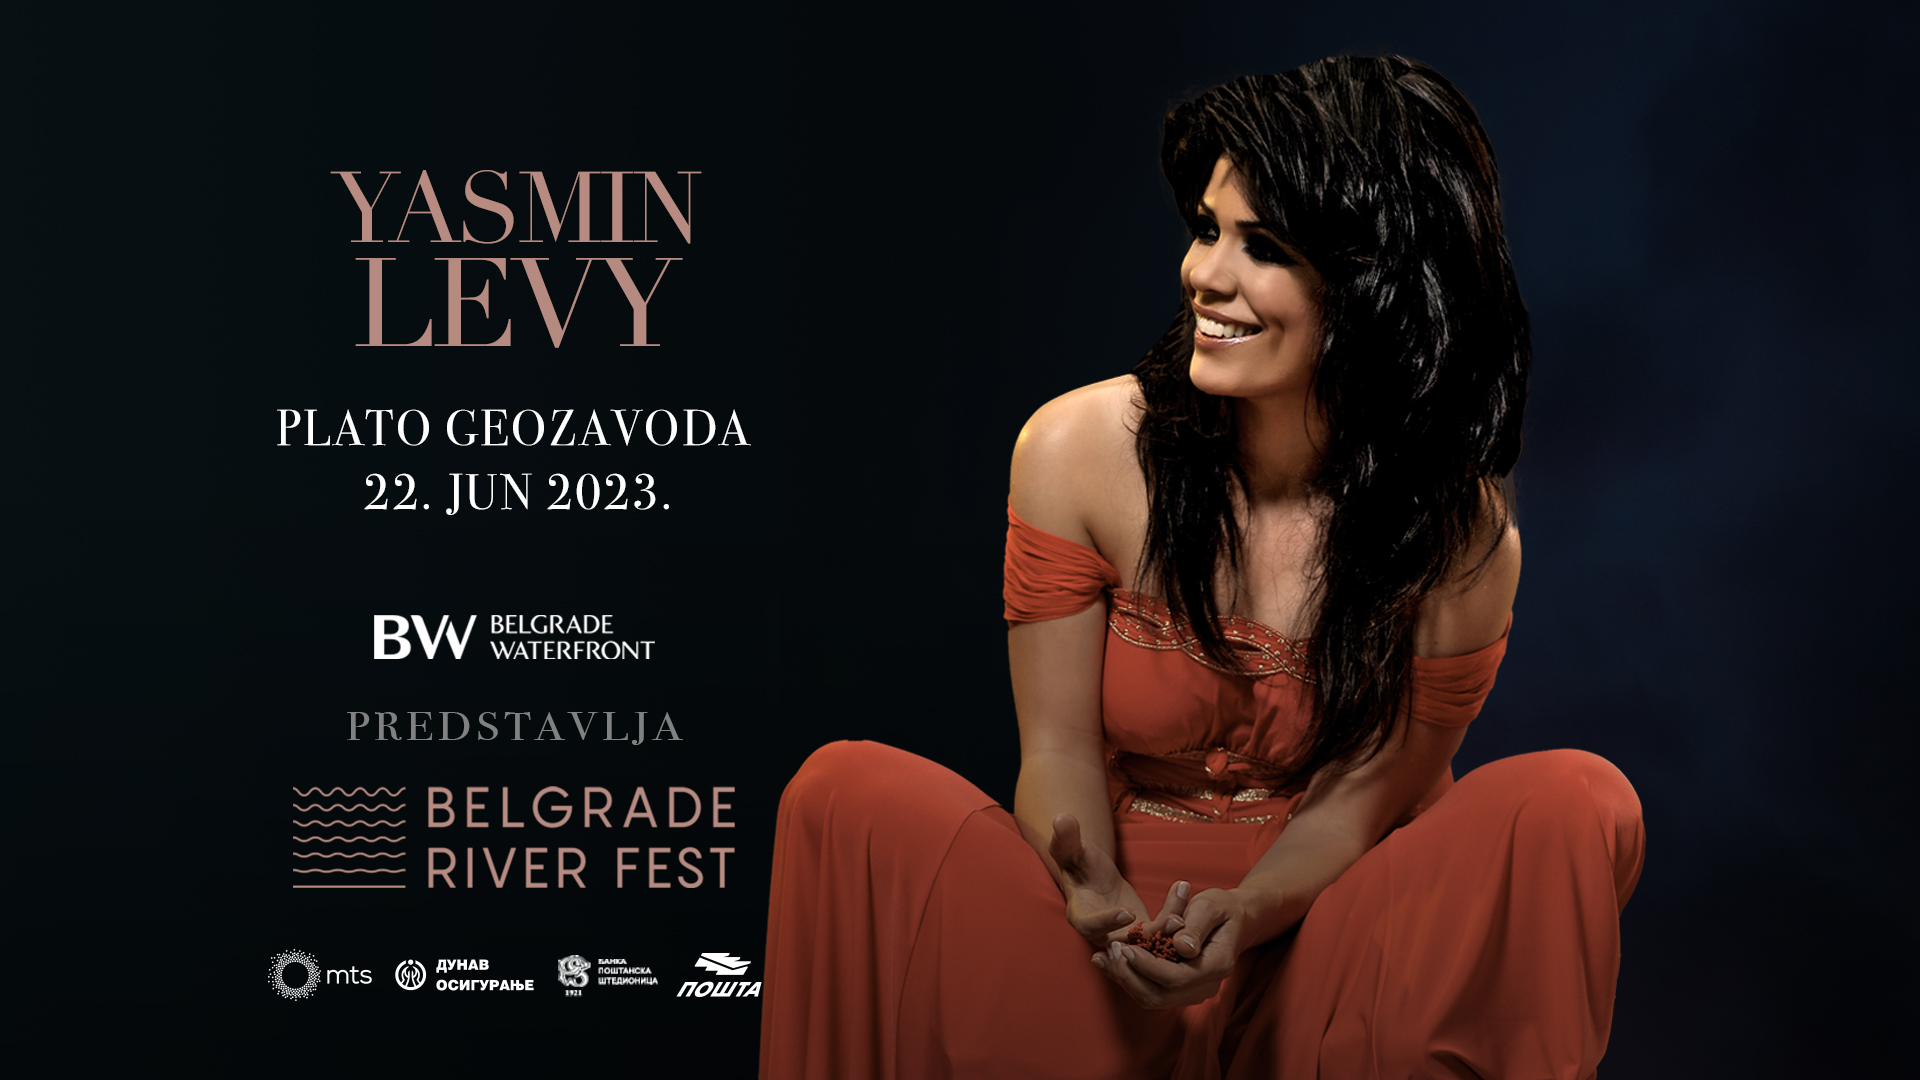 Belgrade River Fest with Jasmin